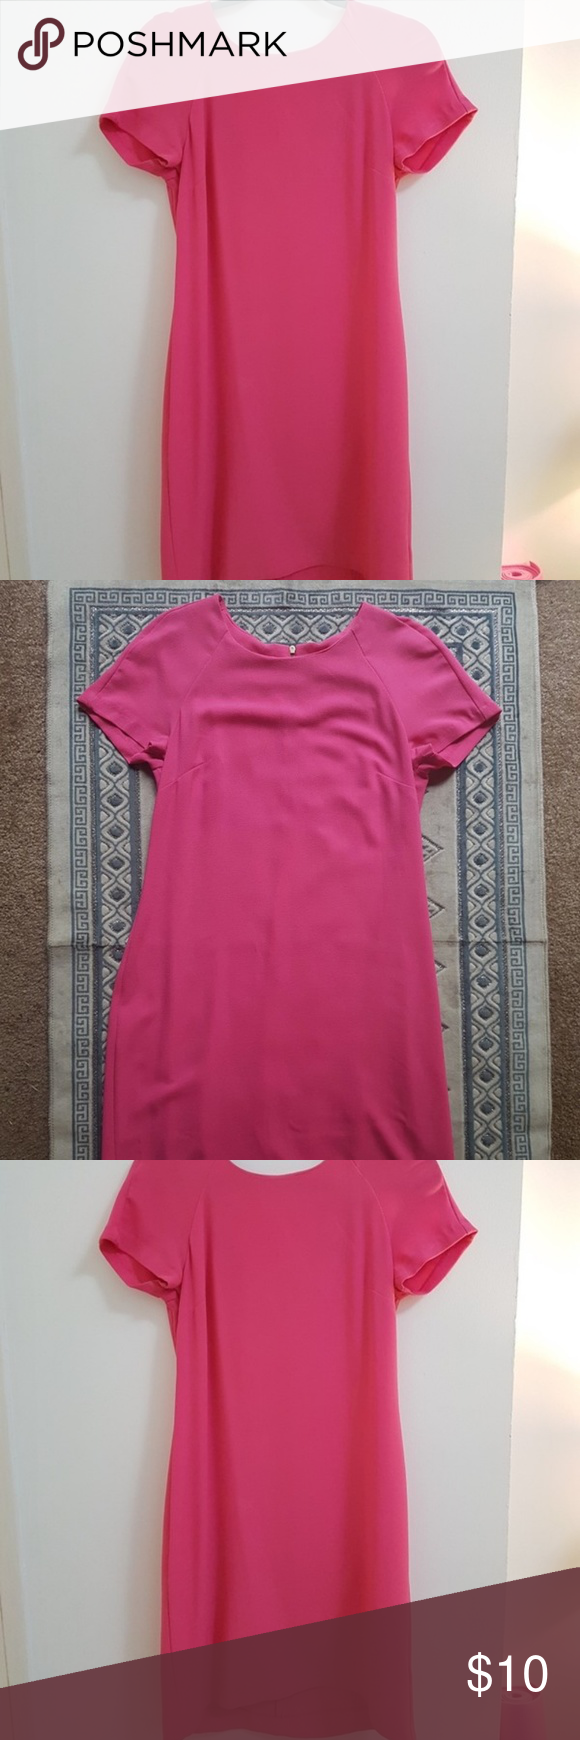 Hot Pink Shift Dress | Shift dress, Dresses, Clothes design